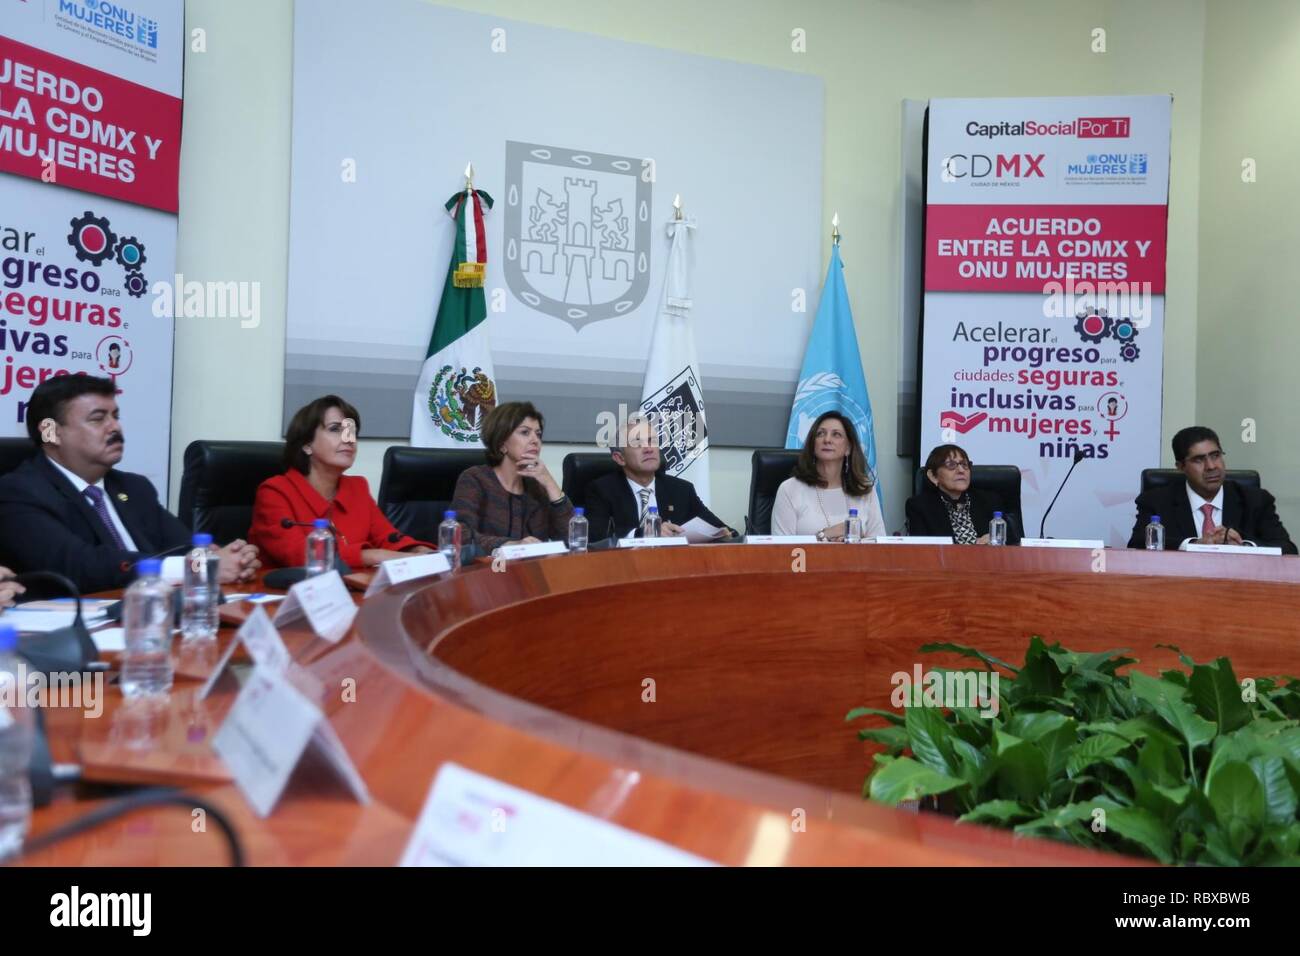 Acuerdo CDMX y ONU Mujeres - Ich - ich - (36922197186). Stockfoto